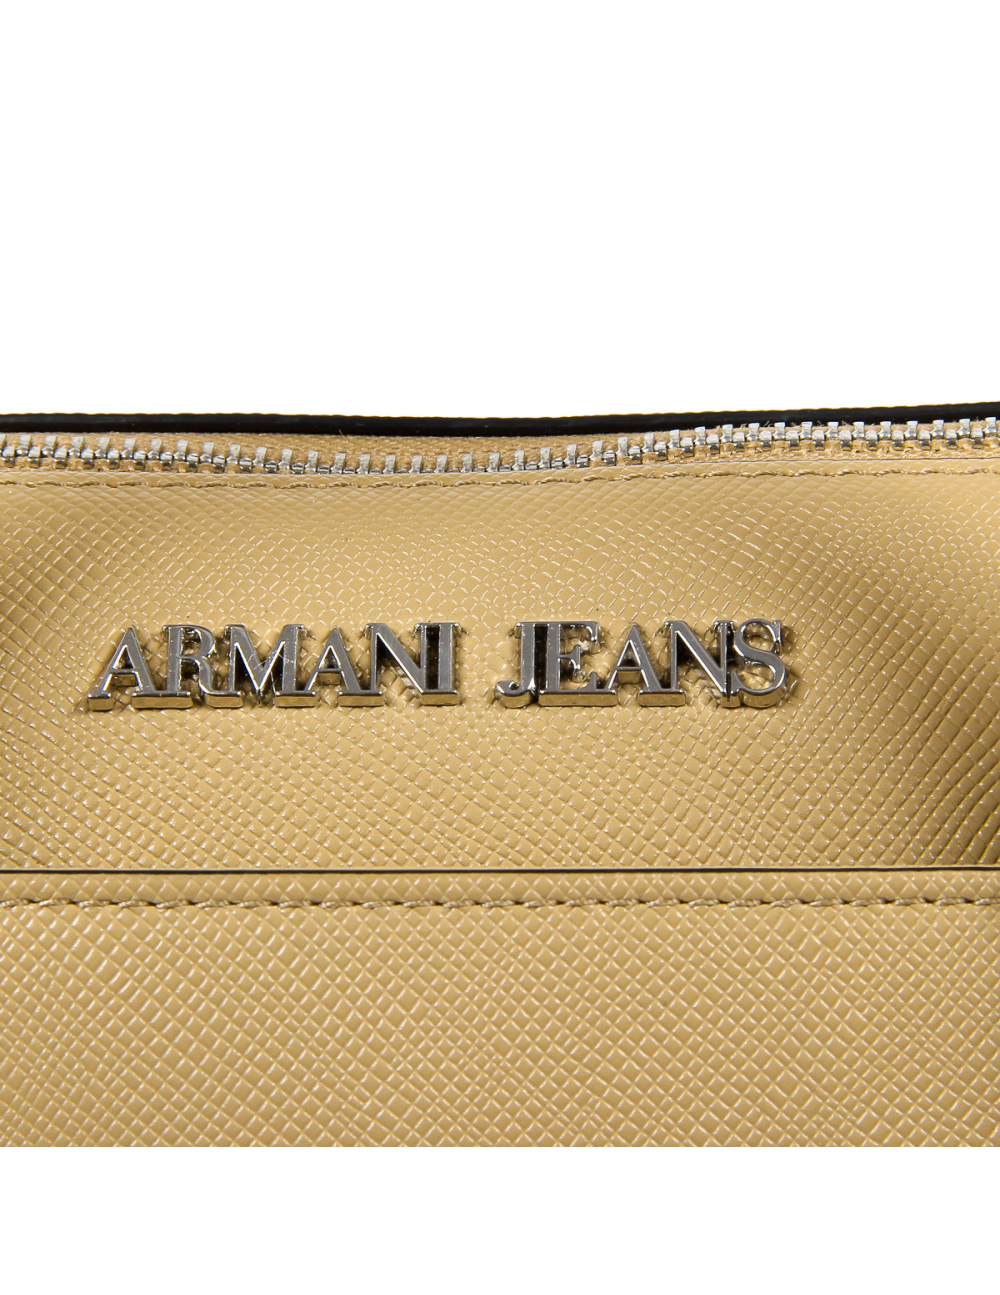 Armani Jeans Womens Handbag Camel 922168 7P756 11955 - YuppyCollections